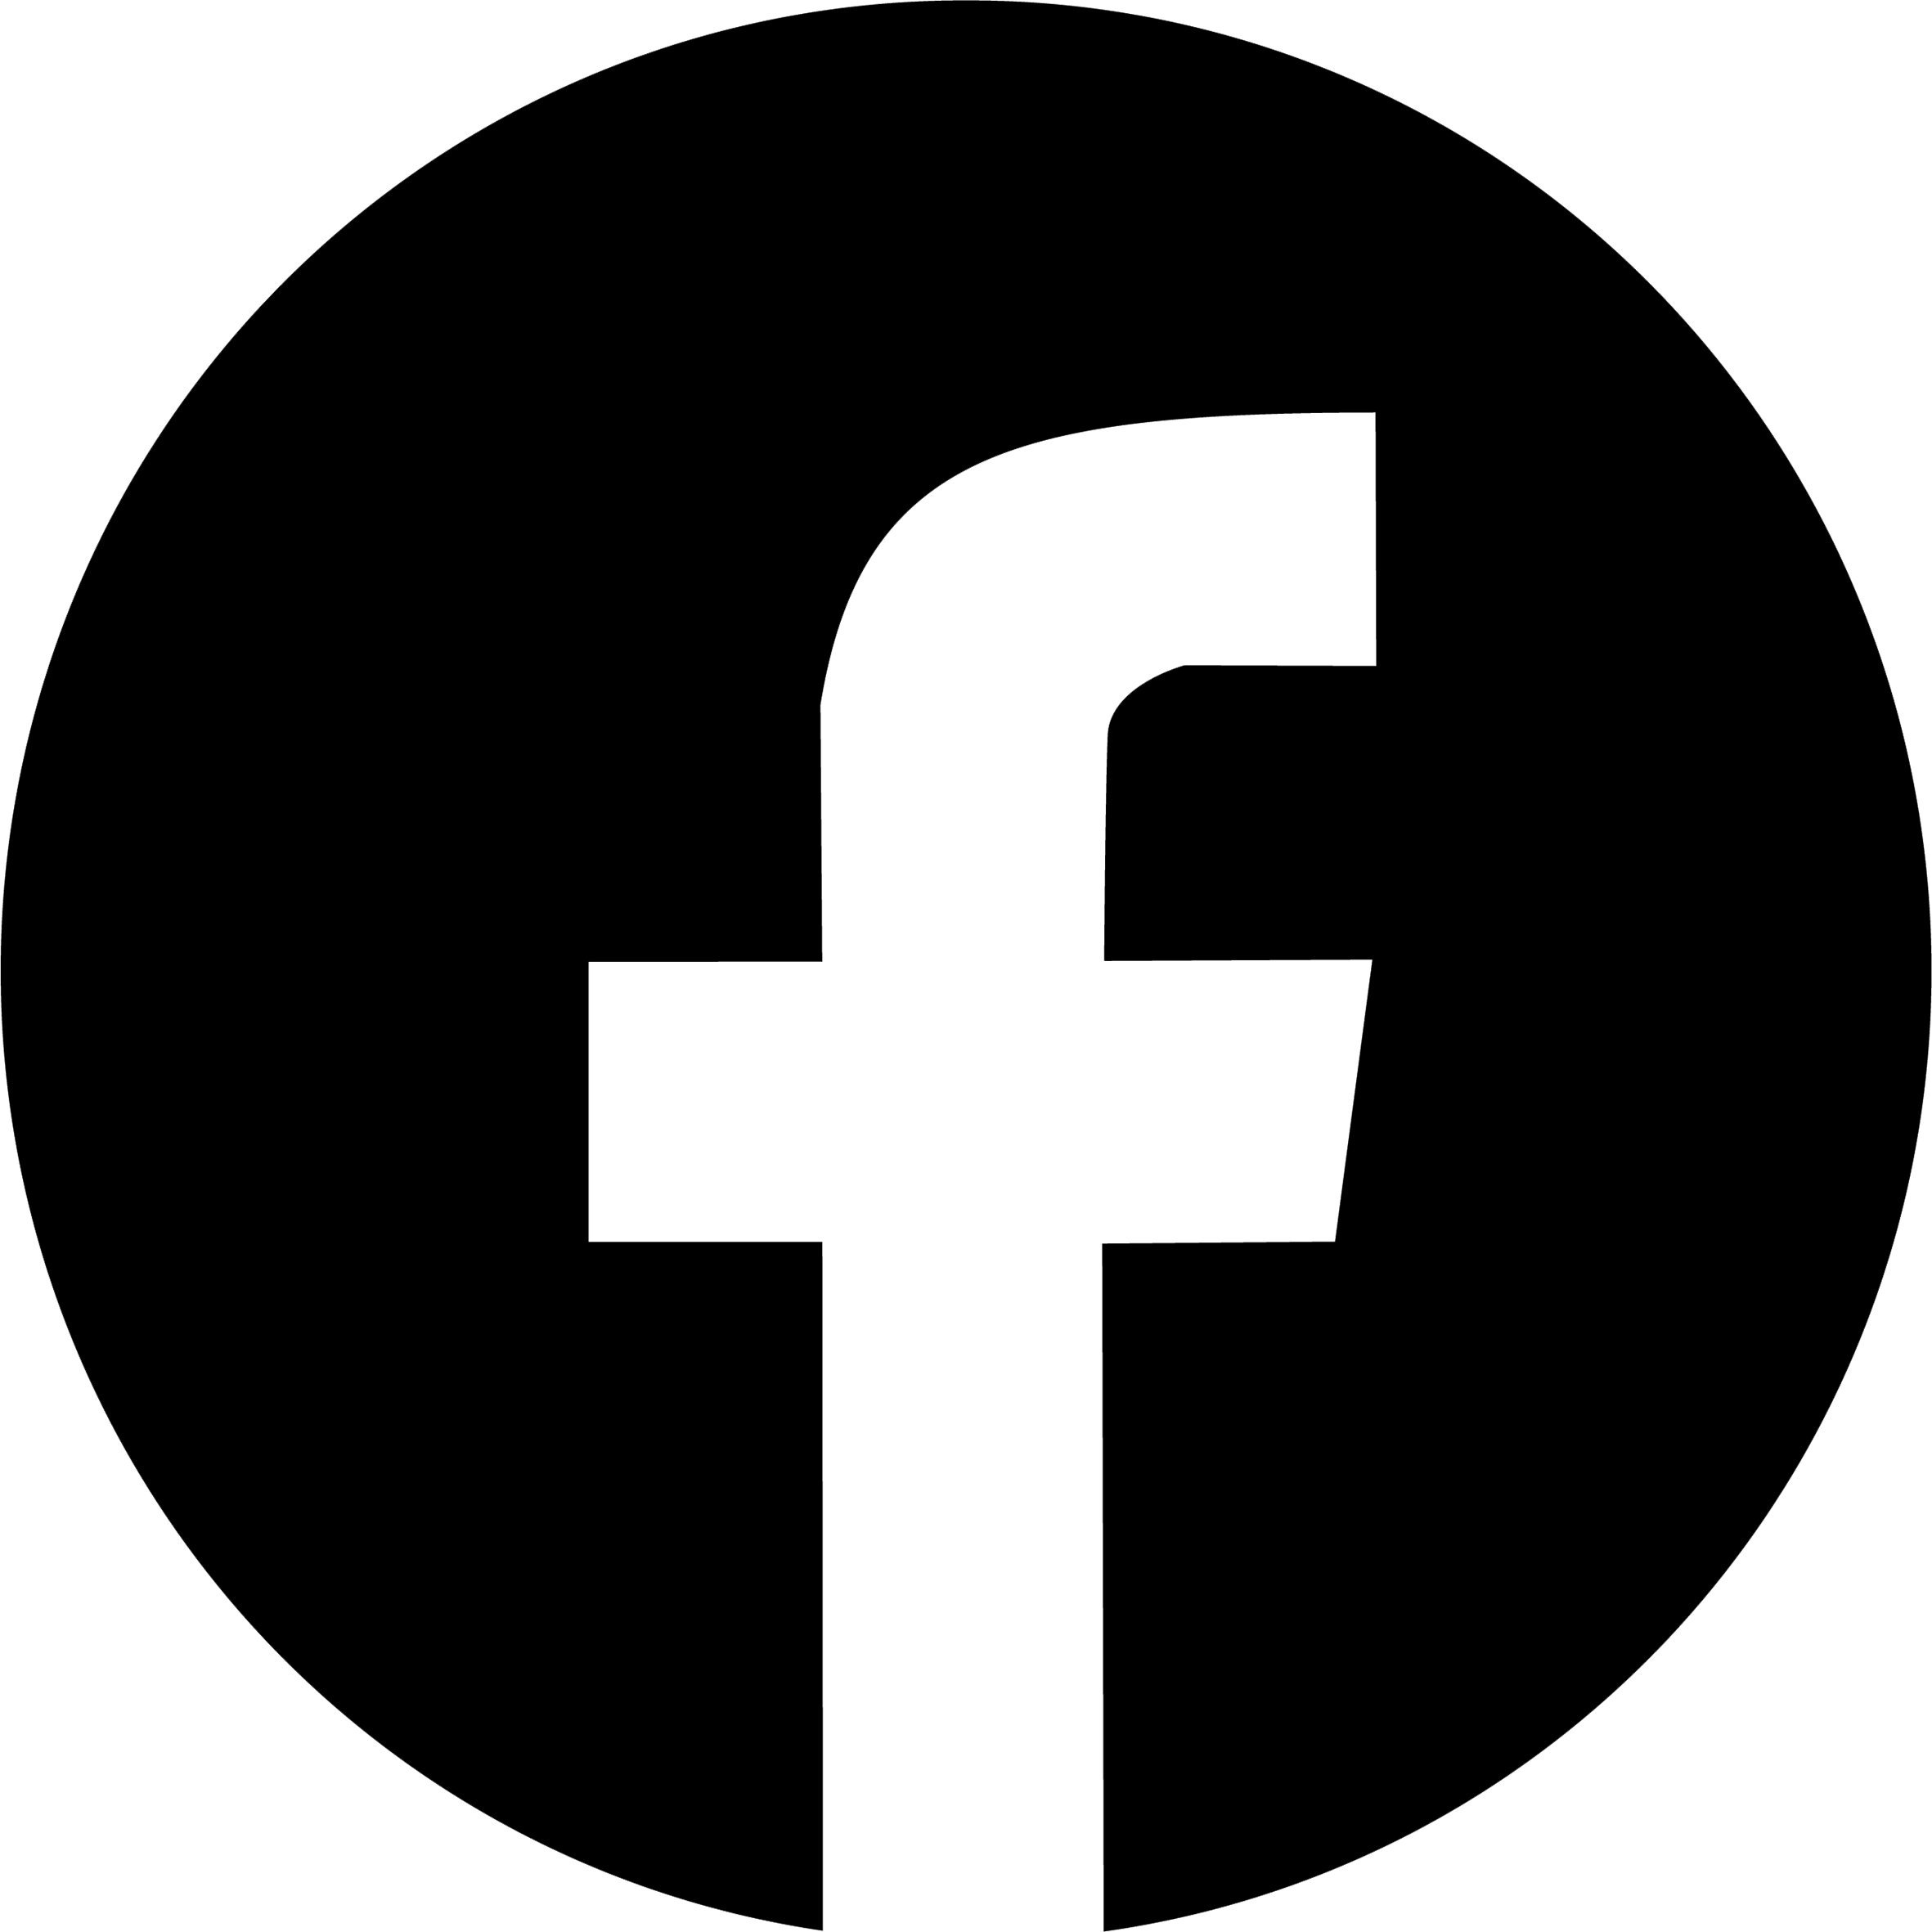 Vector Facebook Logo Black And White PNG Transparent Image